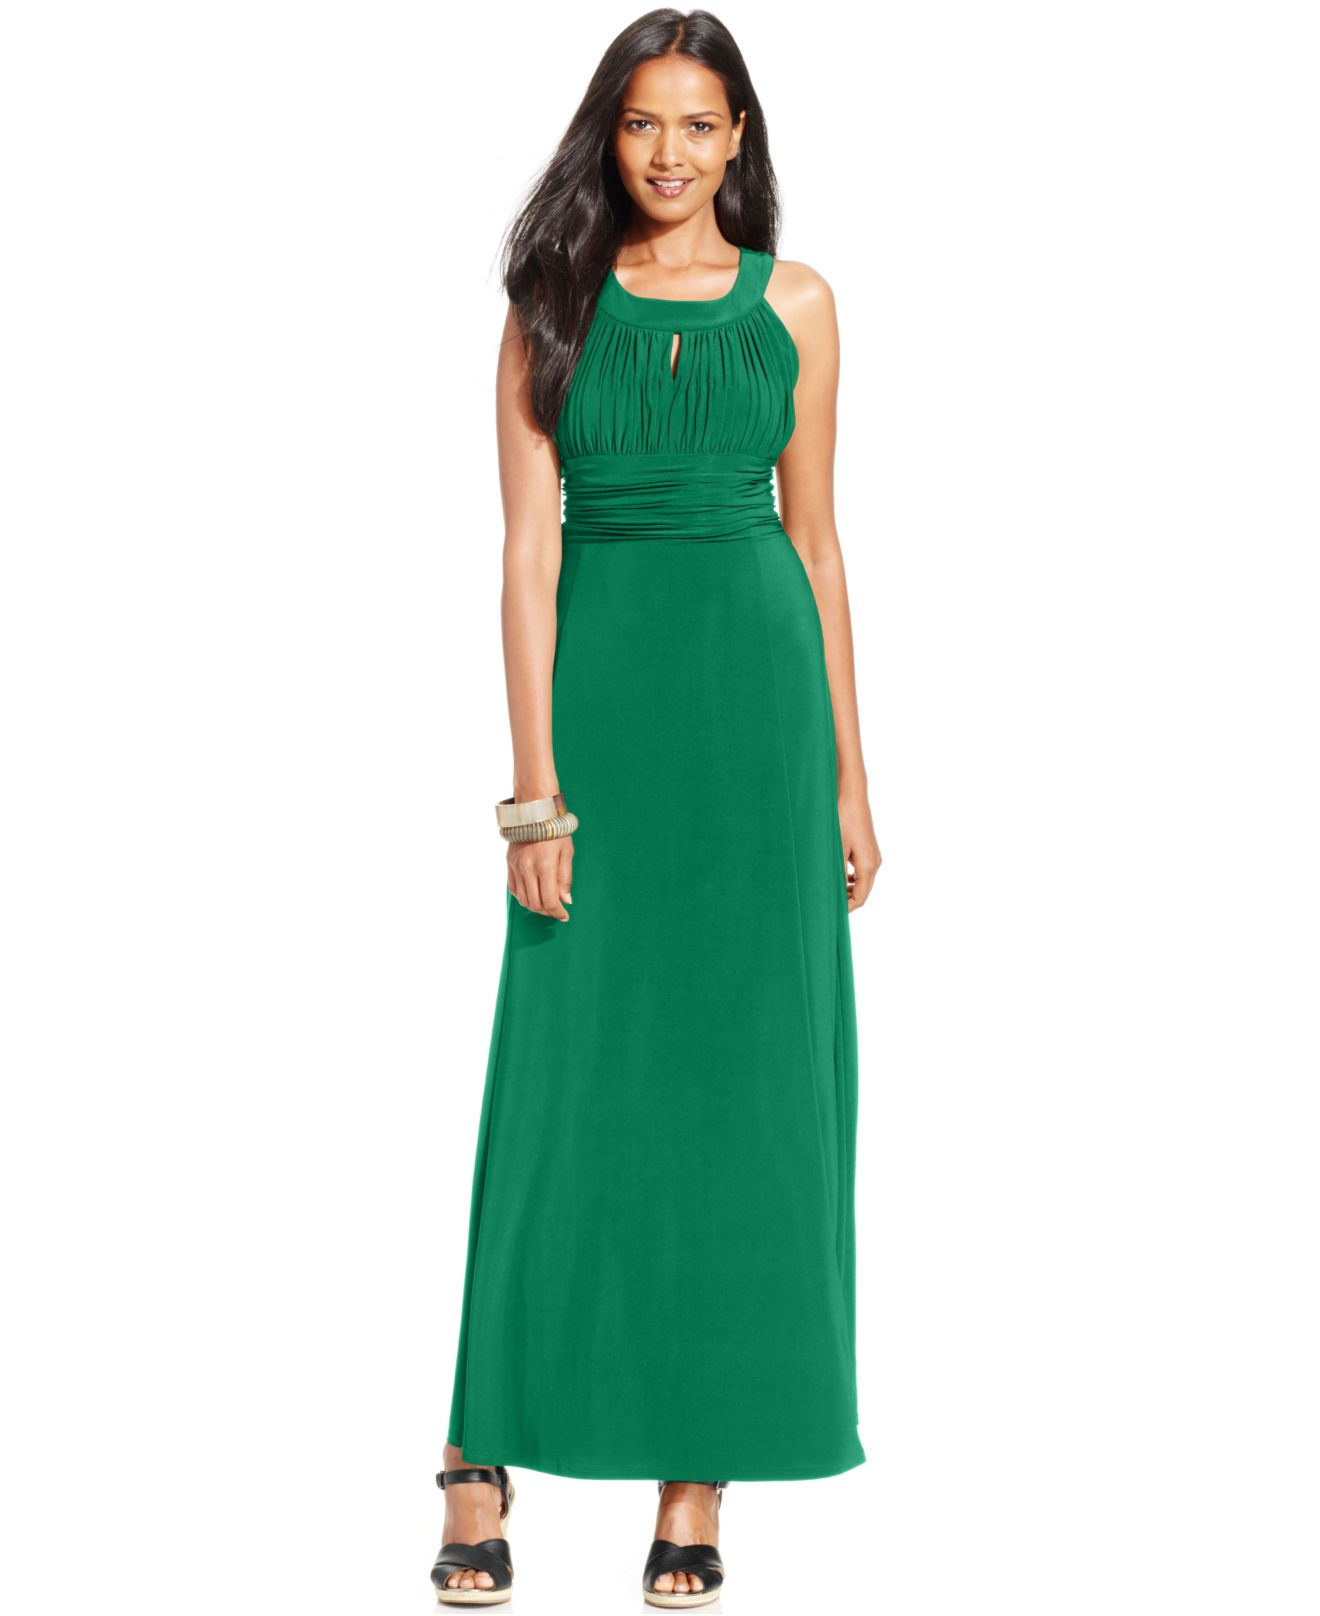 Macys green dresses